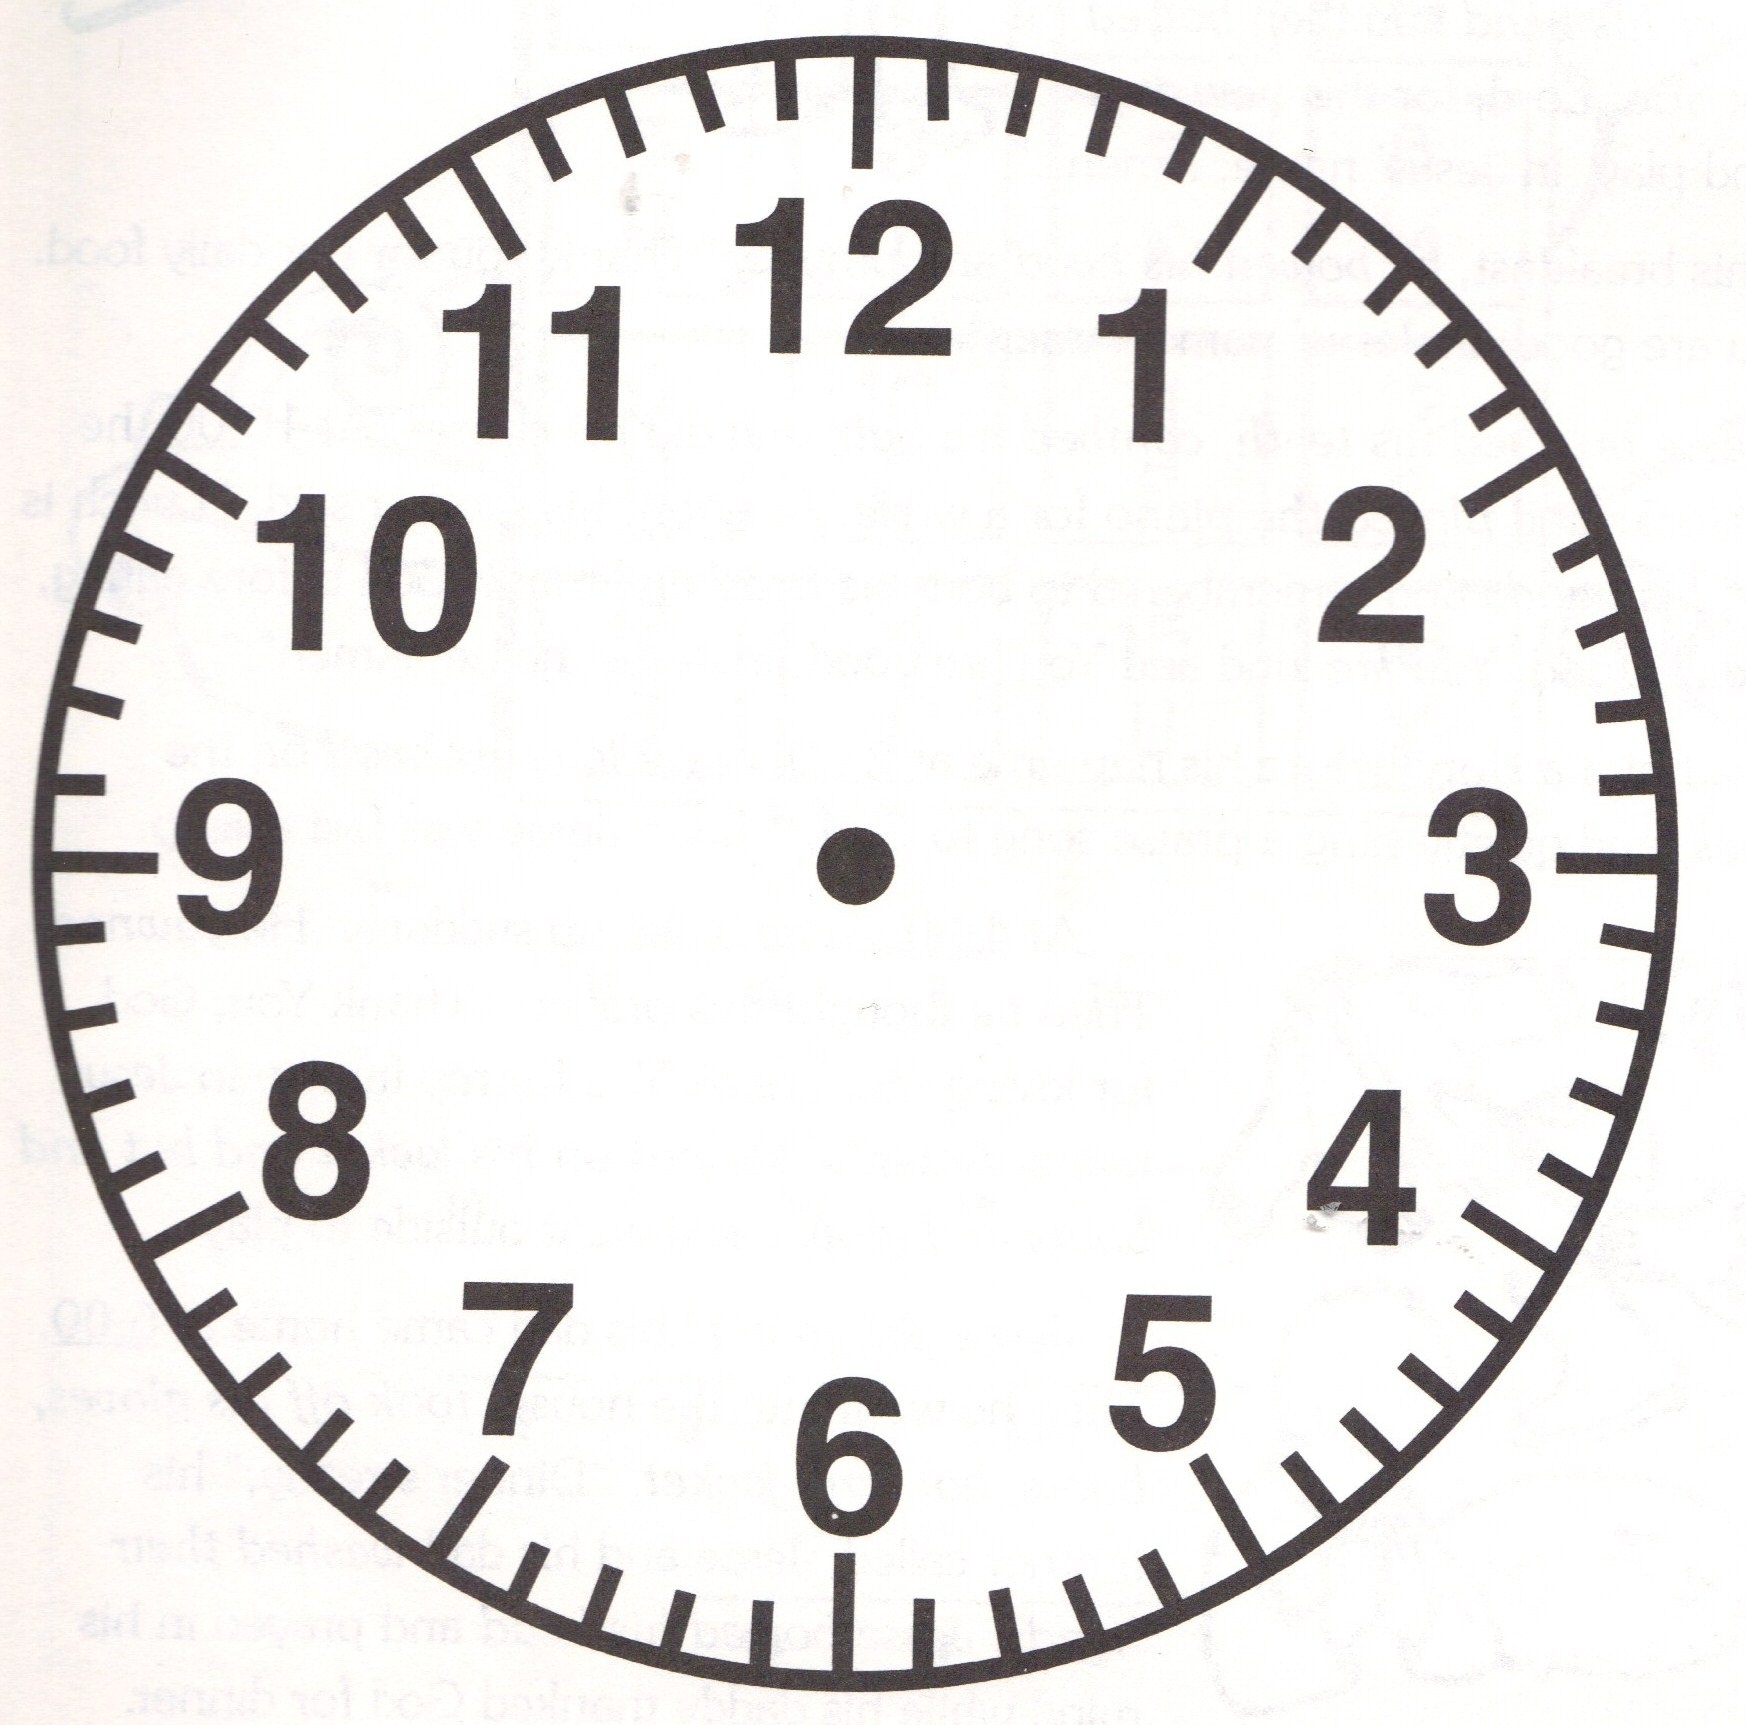 arm clipart clock